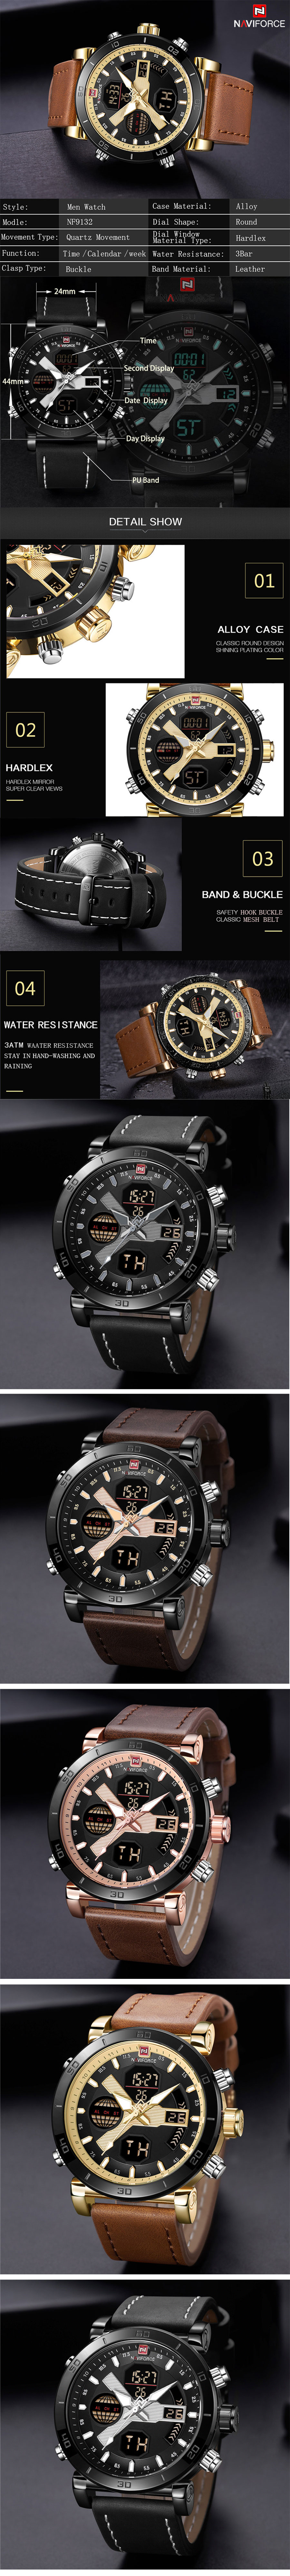 NAVIFORCE-9132-Dual-Display-Digital-Watch-Men-Luminous-Calendar-Watch-Leather-Strap-Watch-1314501